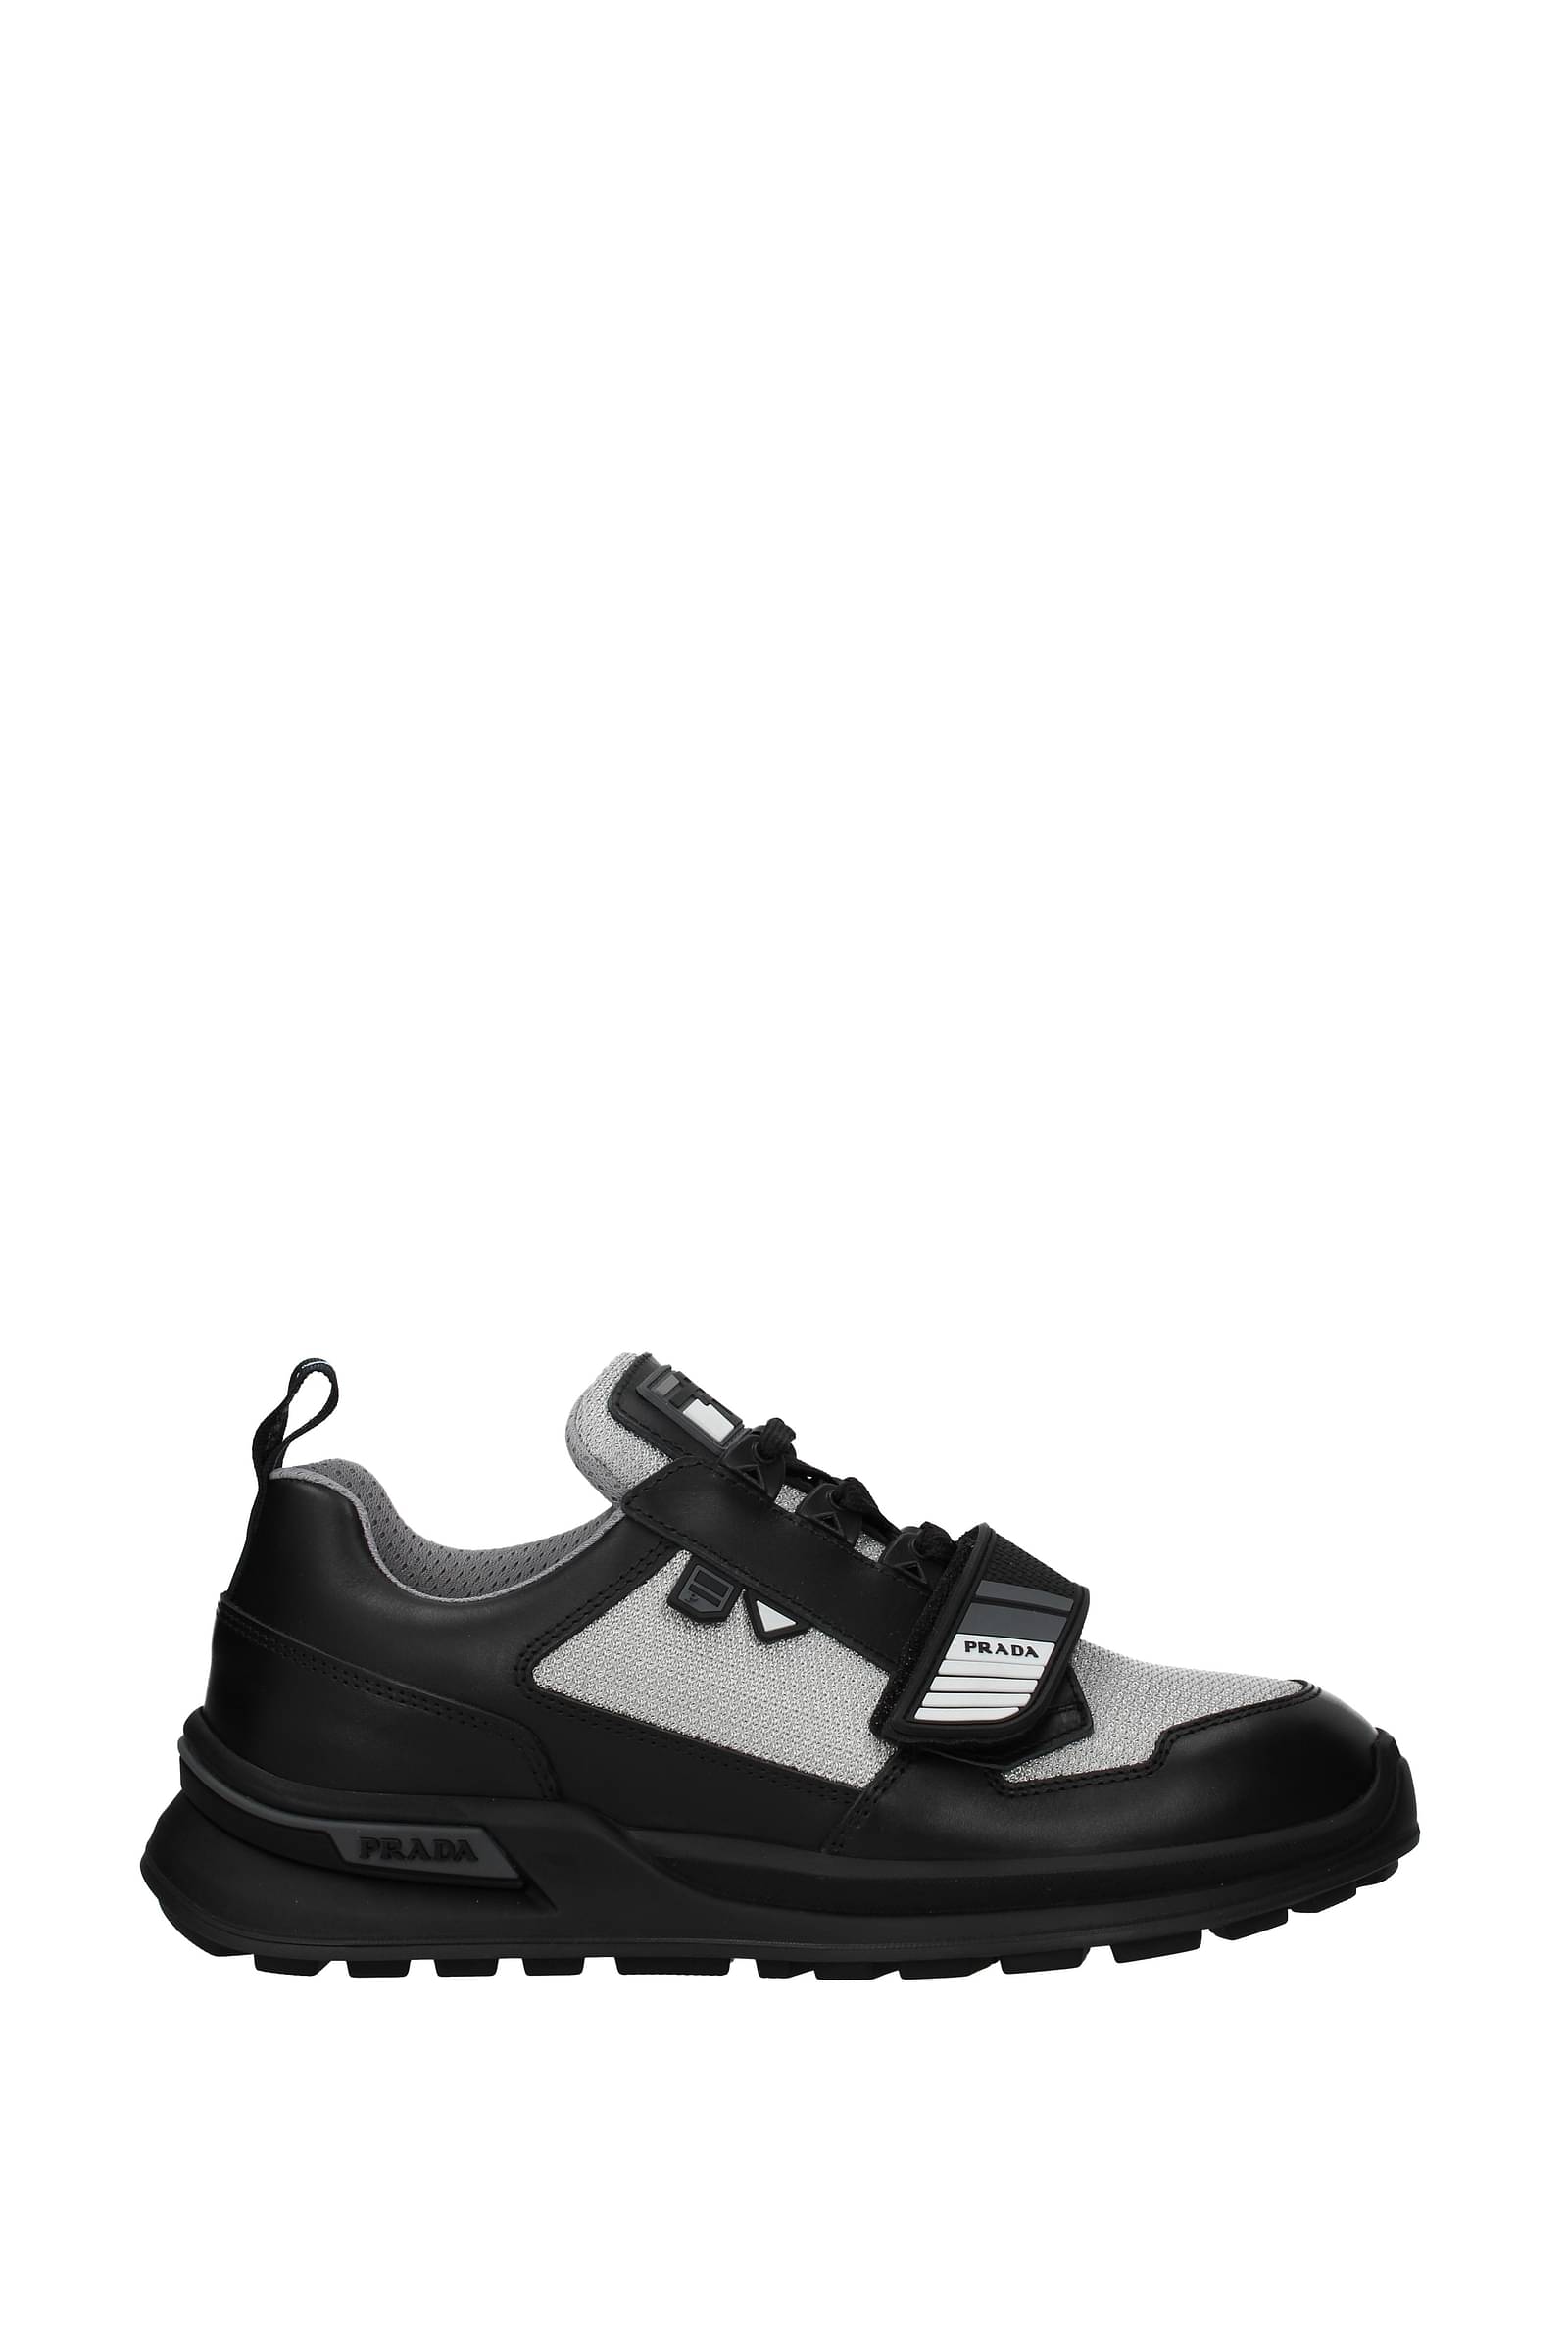 black and silver prada sneakers